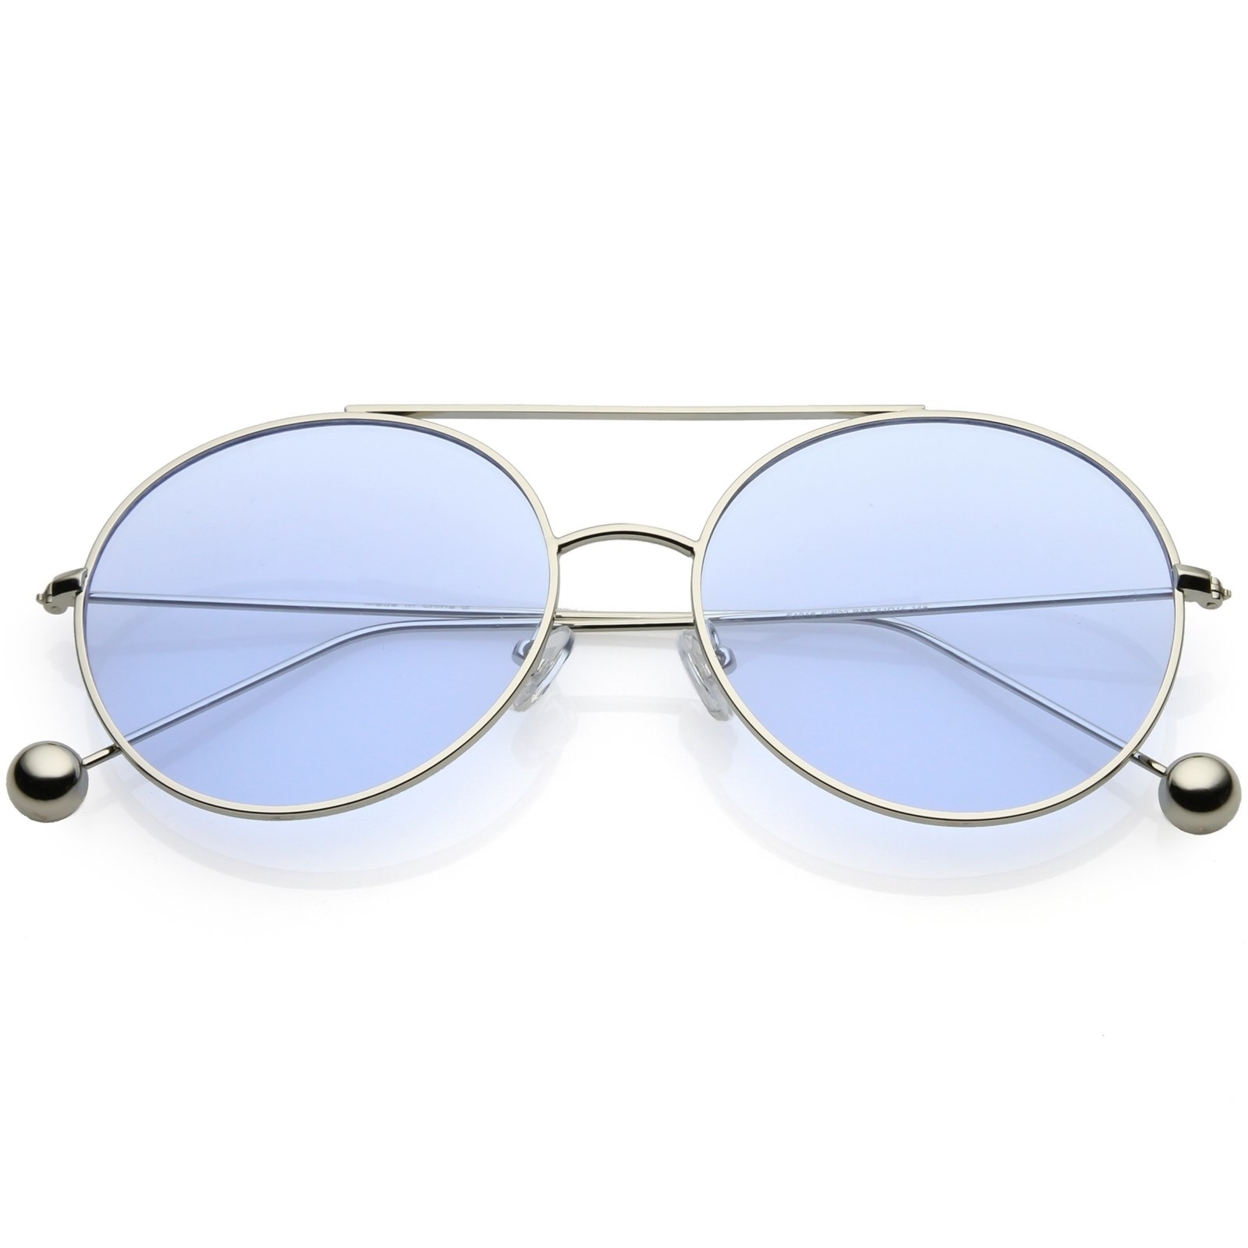 Premium Oversize Round Sunglasses Metal Double Nose Bridge Color Flat Lens 59mm - Silver / Green